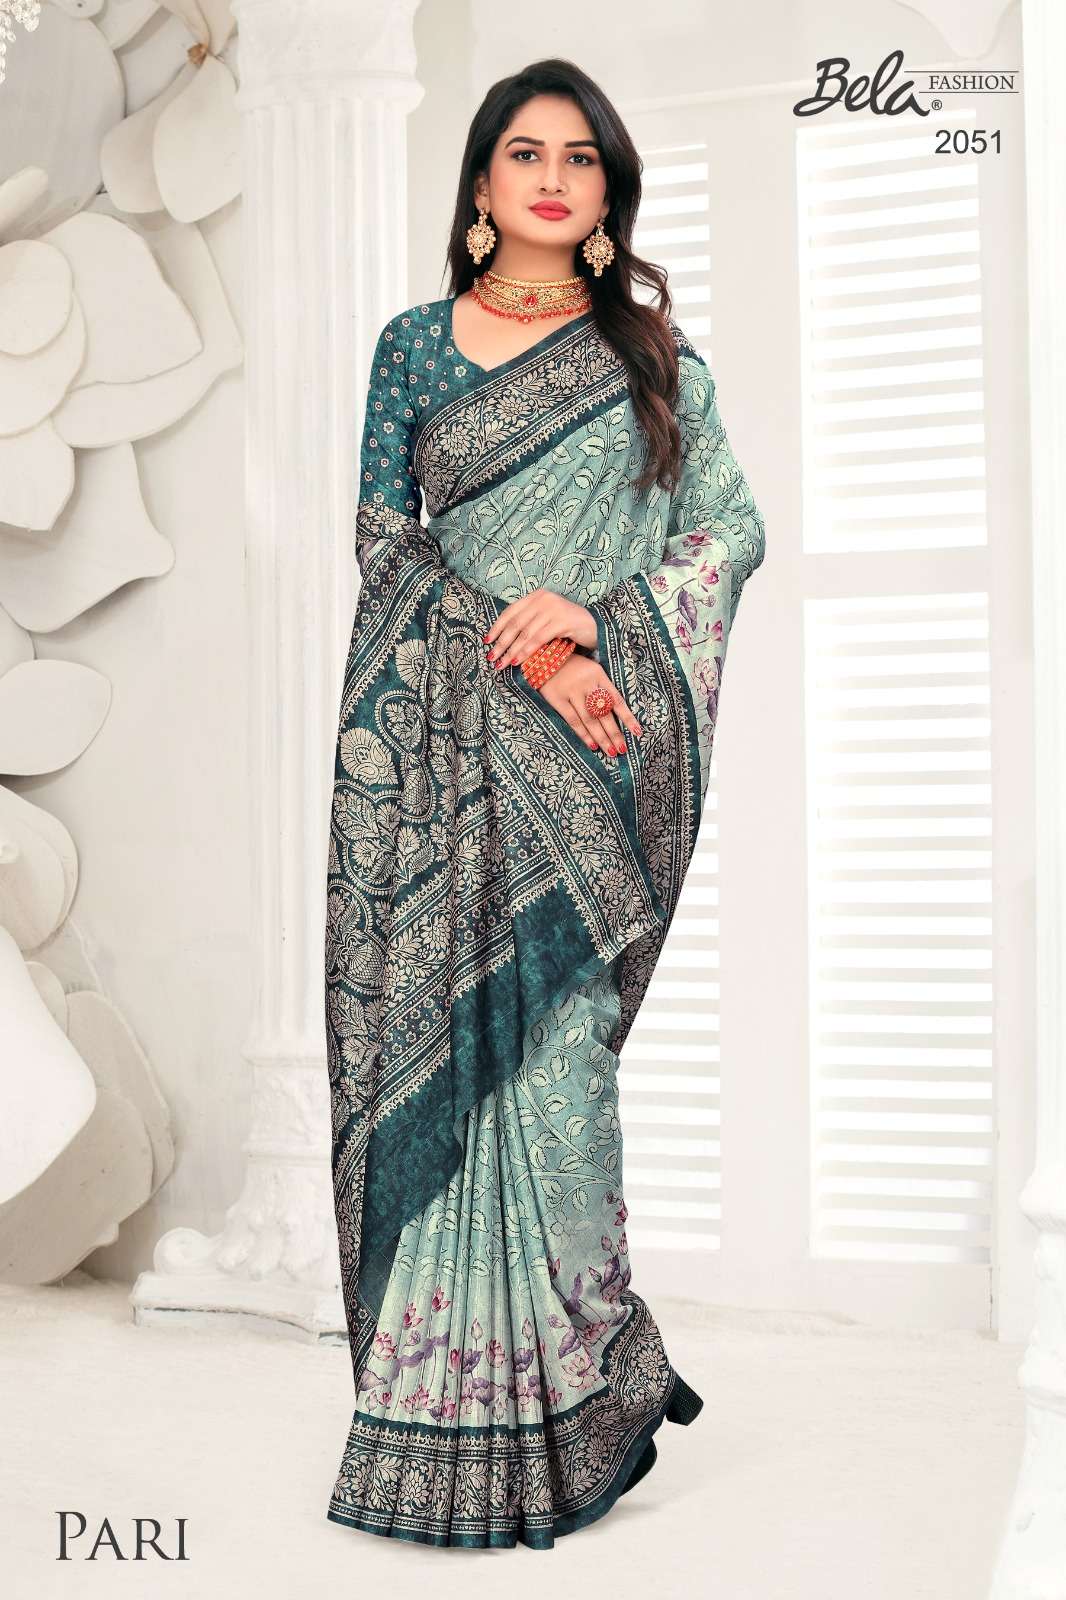 bela fashion pari 2043-2055 series adorable fancy sarees